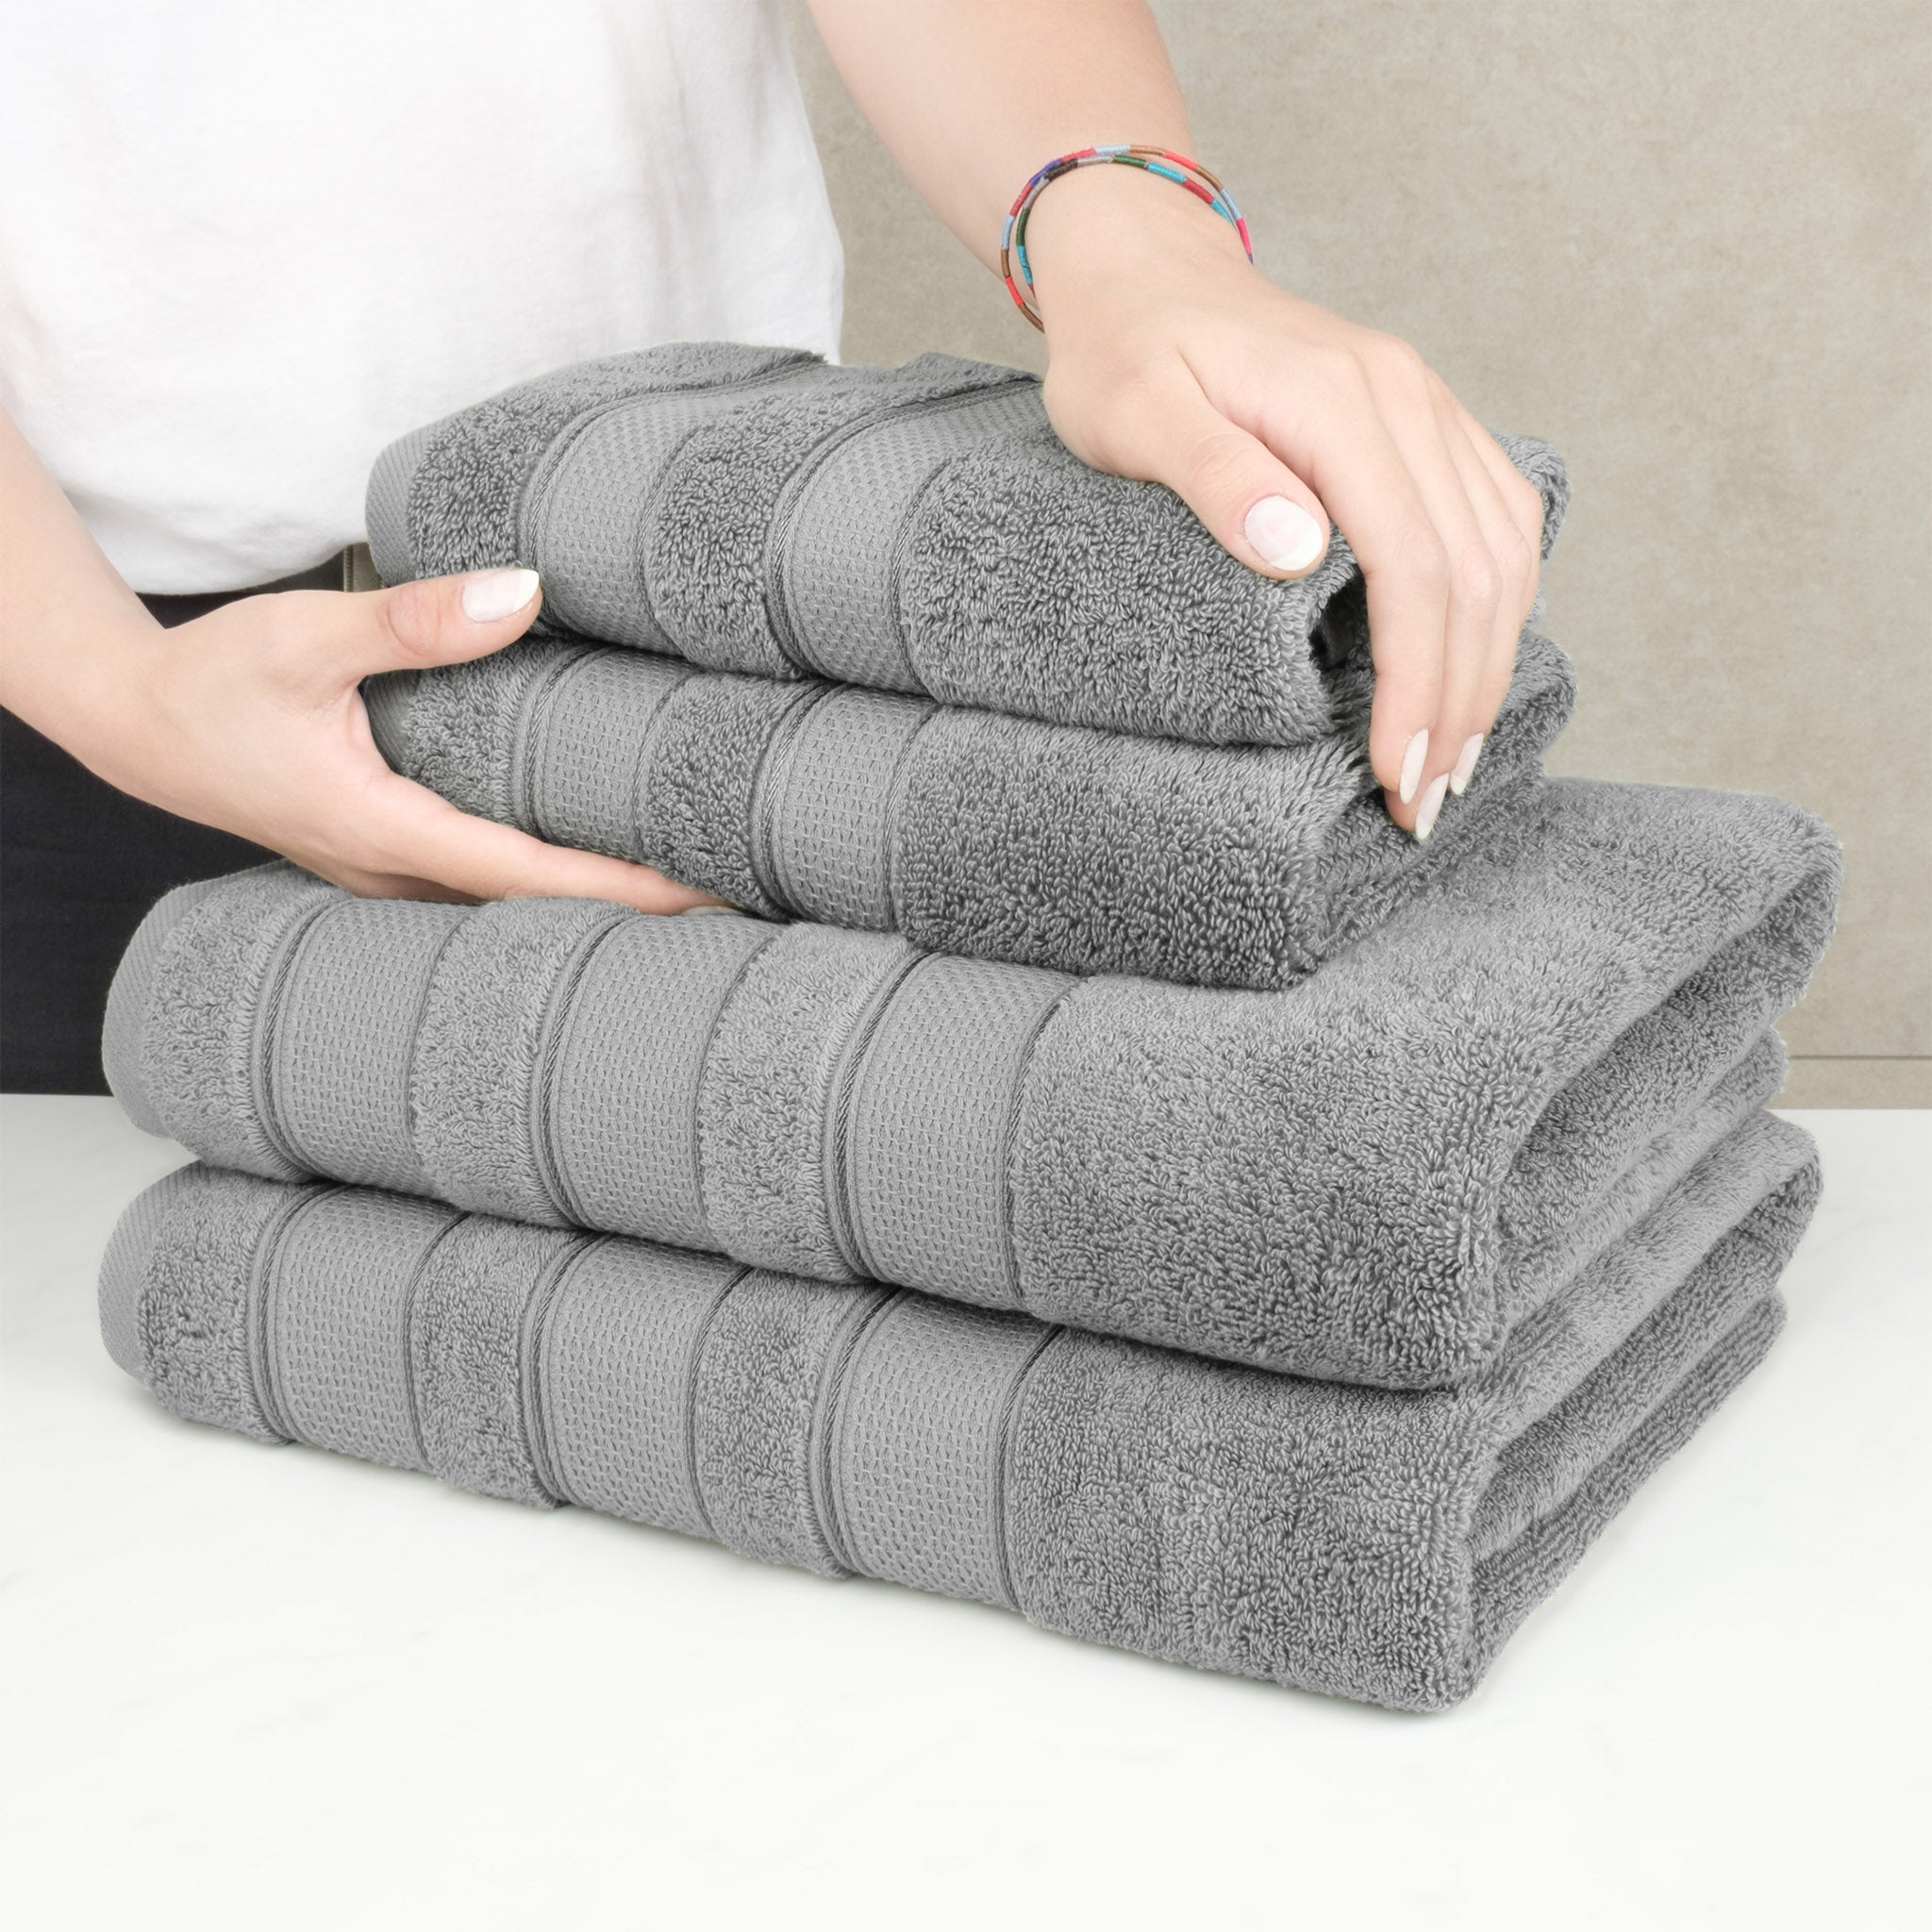 Stream American Soft Linen Luxury 6 Piece Towel Set- Areejproducts